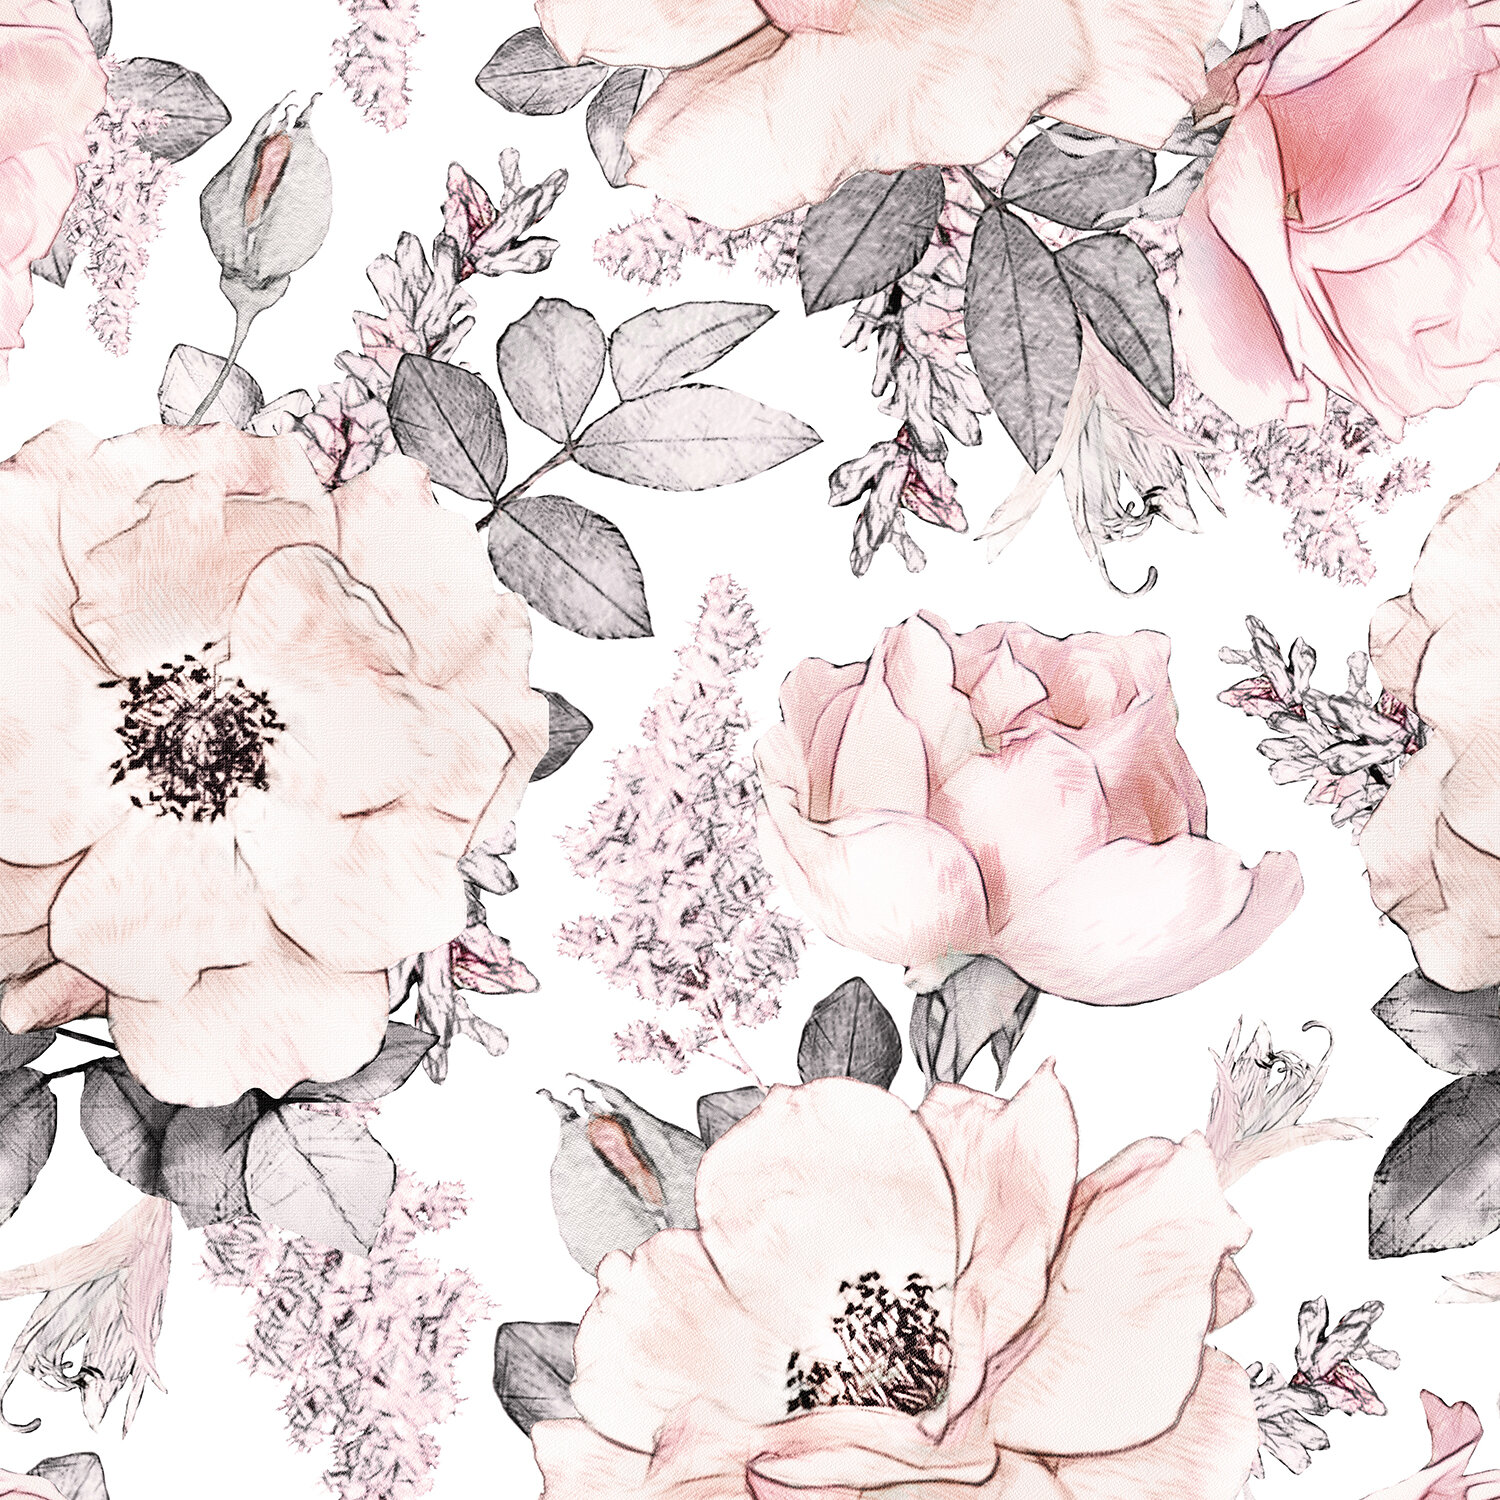 pink rose flowers wallpapers for desktop